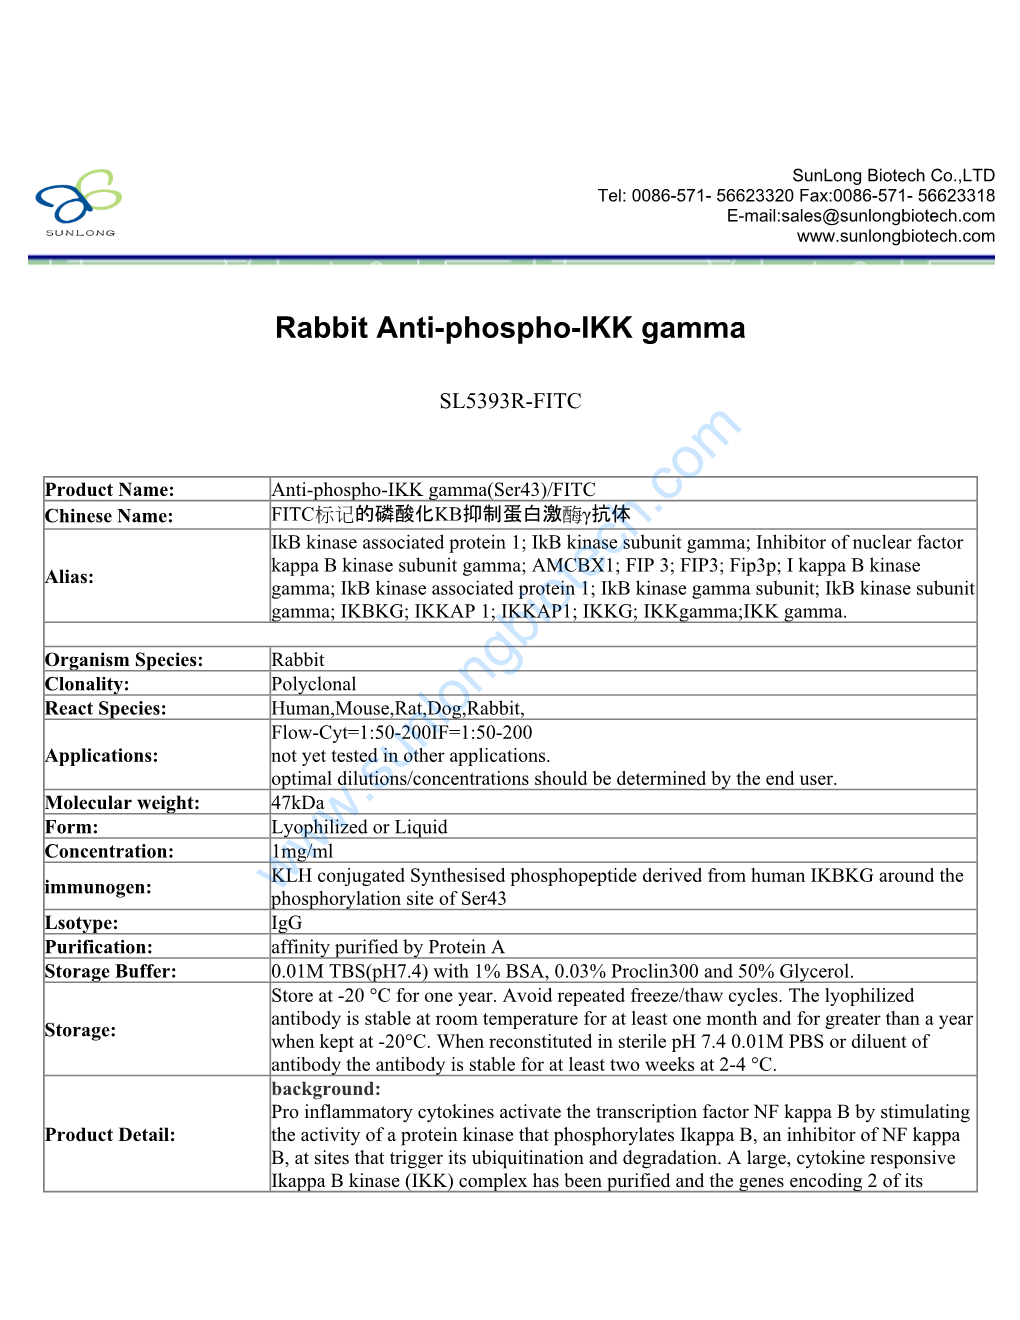 Rabbit Anti-Phospho-IKK Gamma-SL5393R-FITC